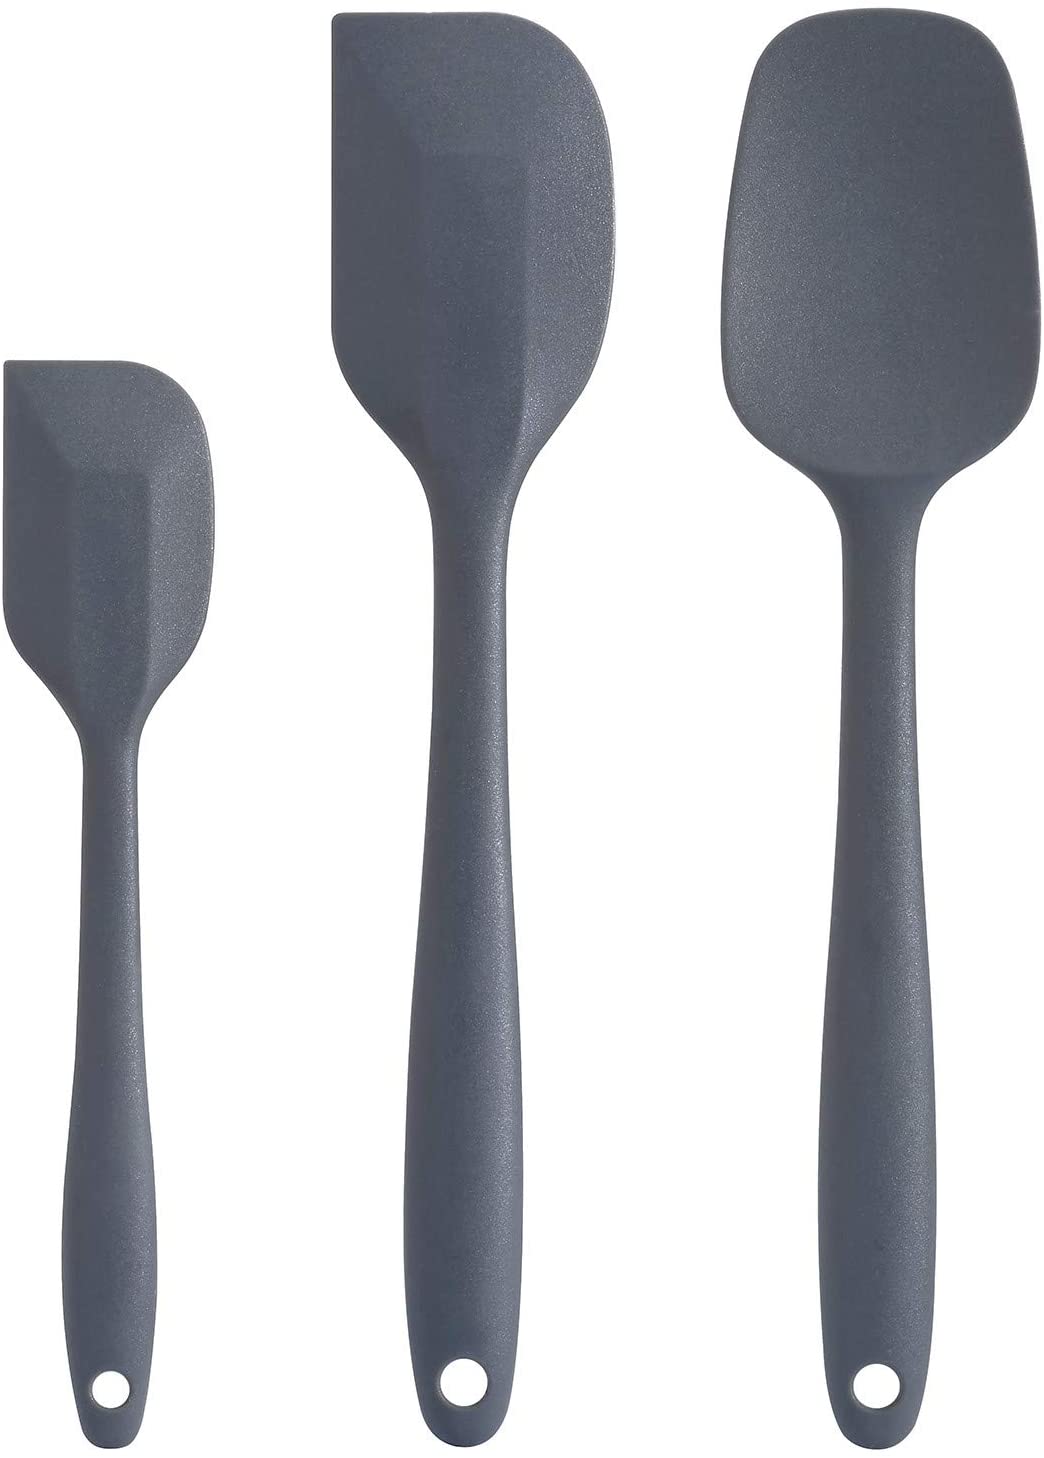 https://www.dontwasteyourmoney.com/wp-content/uploads/2020/09/cooptop-heat-resistant-silicone-spatula-set.jpg